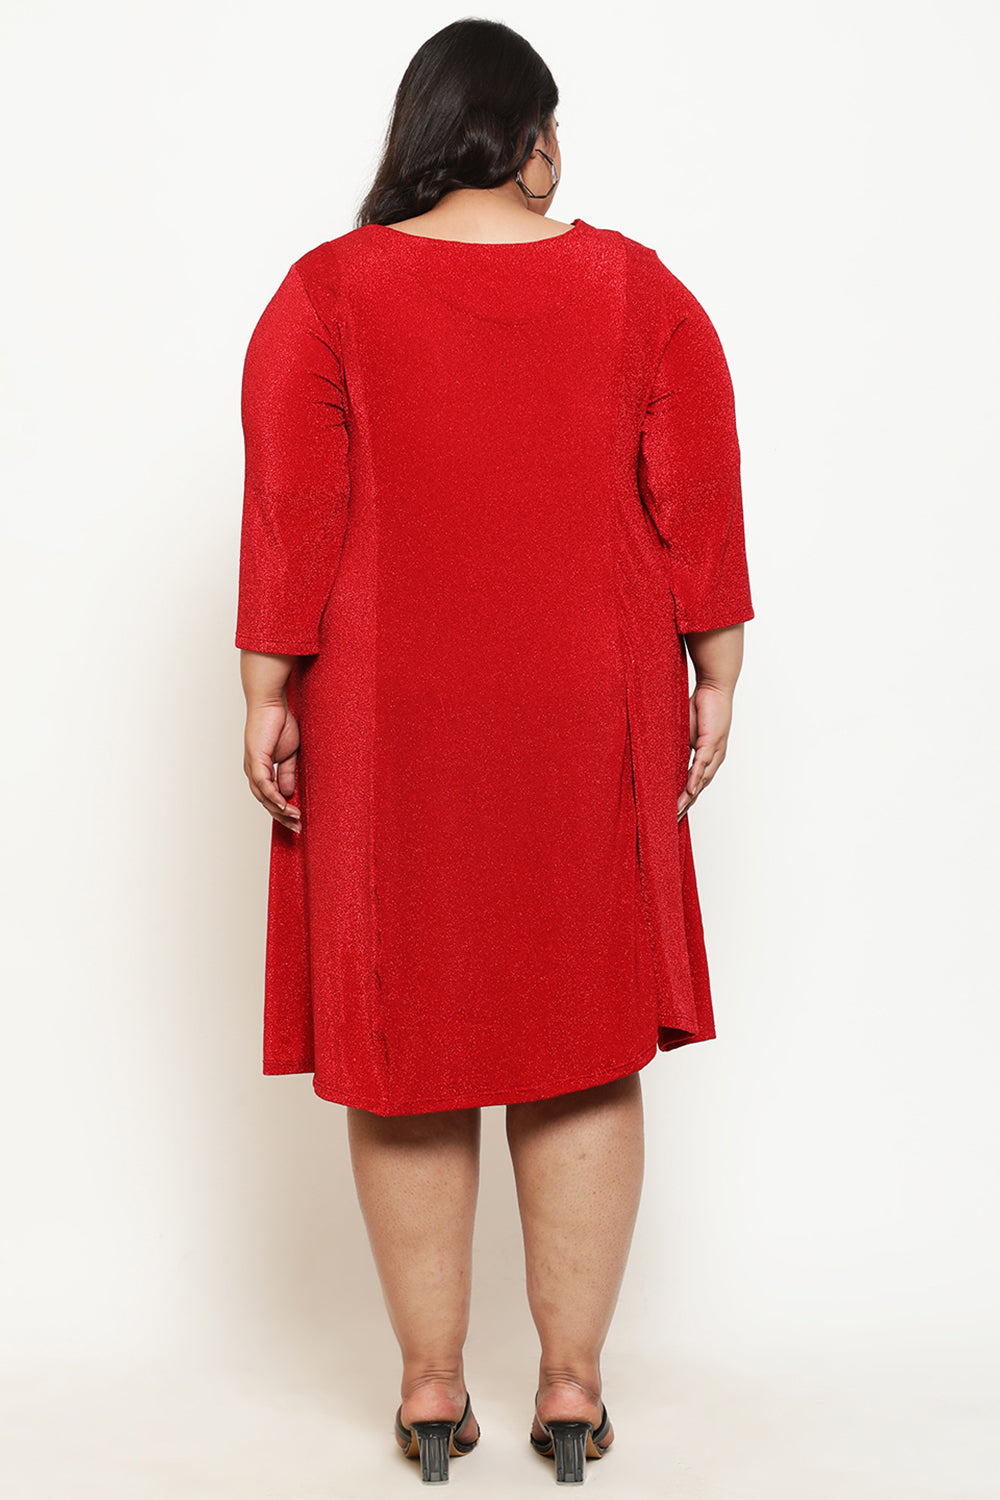 Comfortable Plus Size Red Lurex Dress